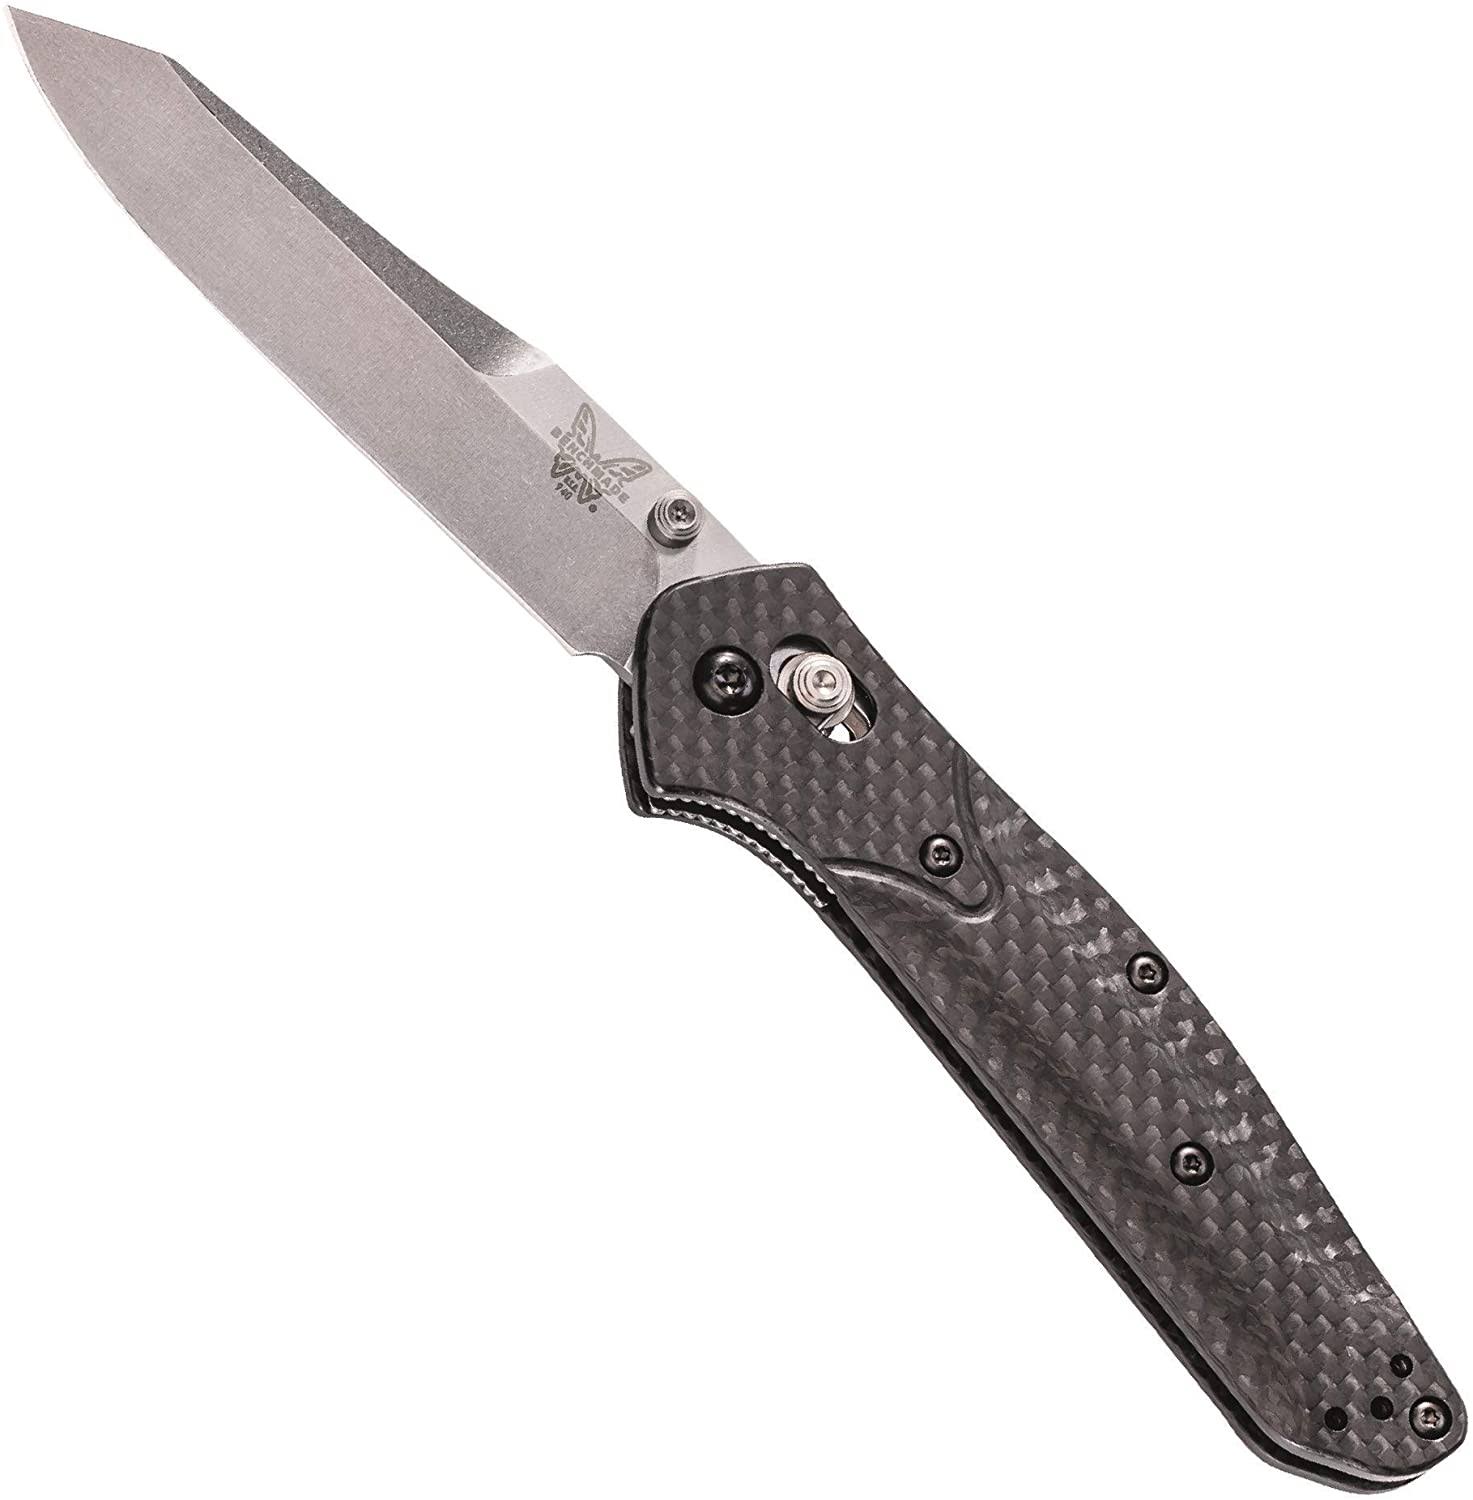 Benchmade 940-1 Osborne Locking Knife - Carbon Fiber